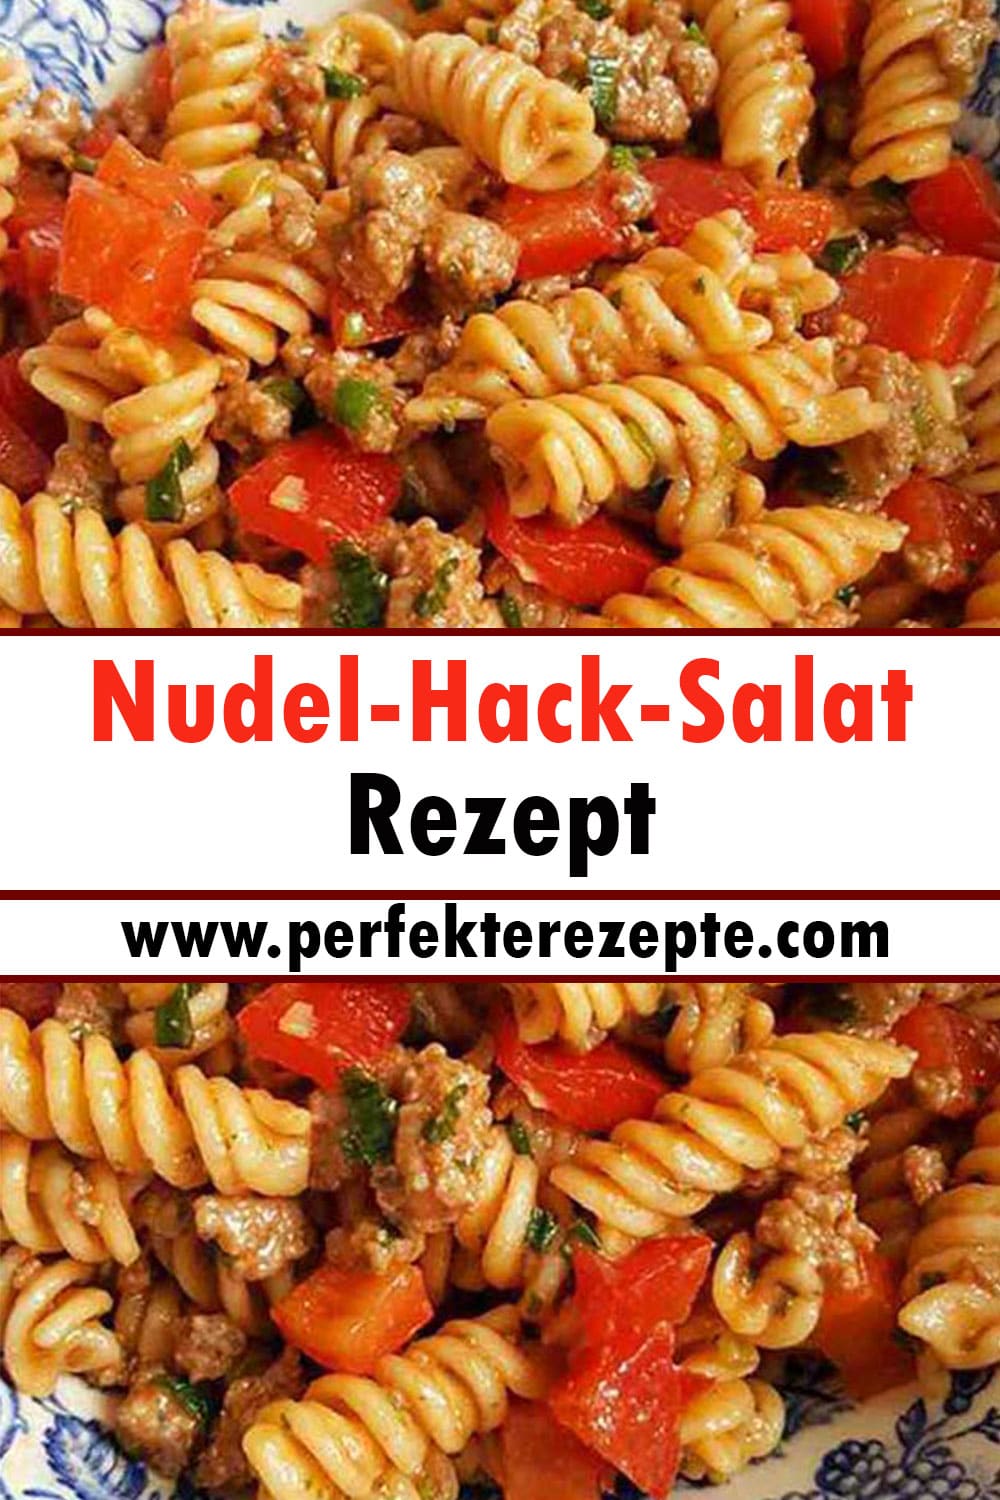 Nudel-Hack-Salat Rezept